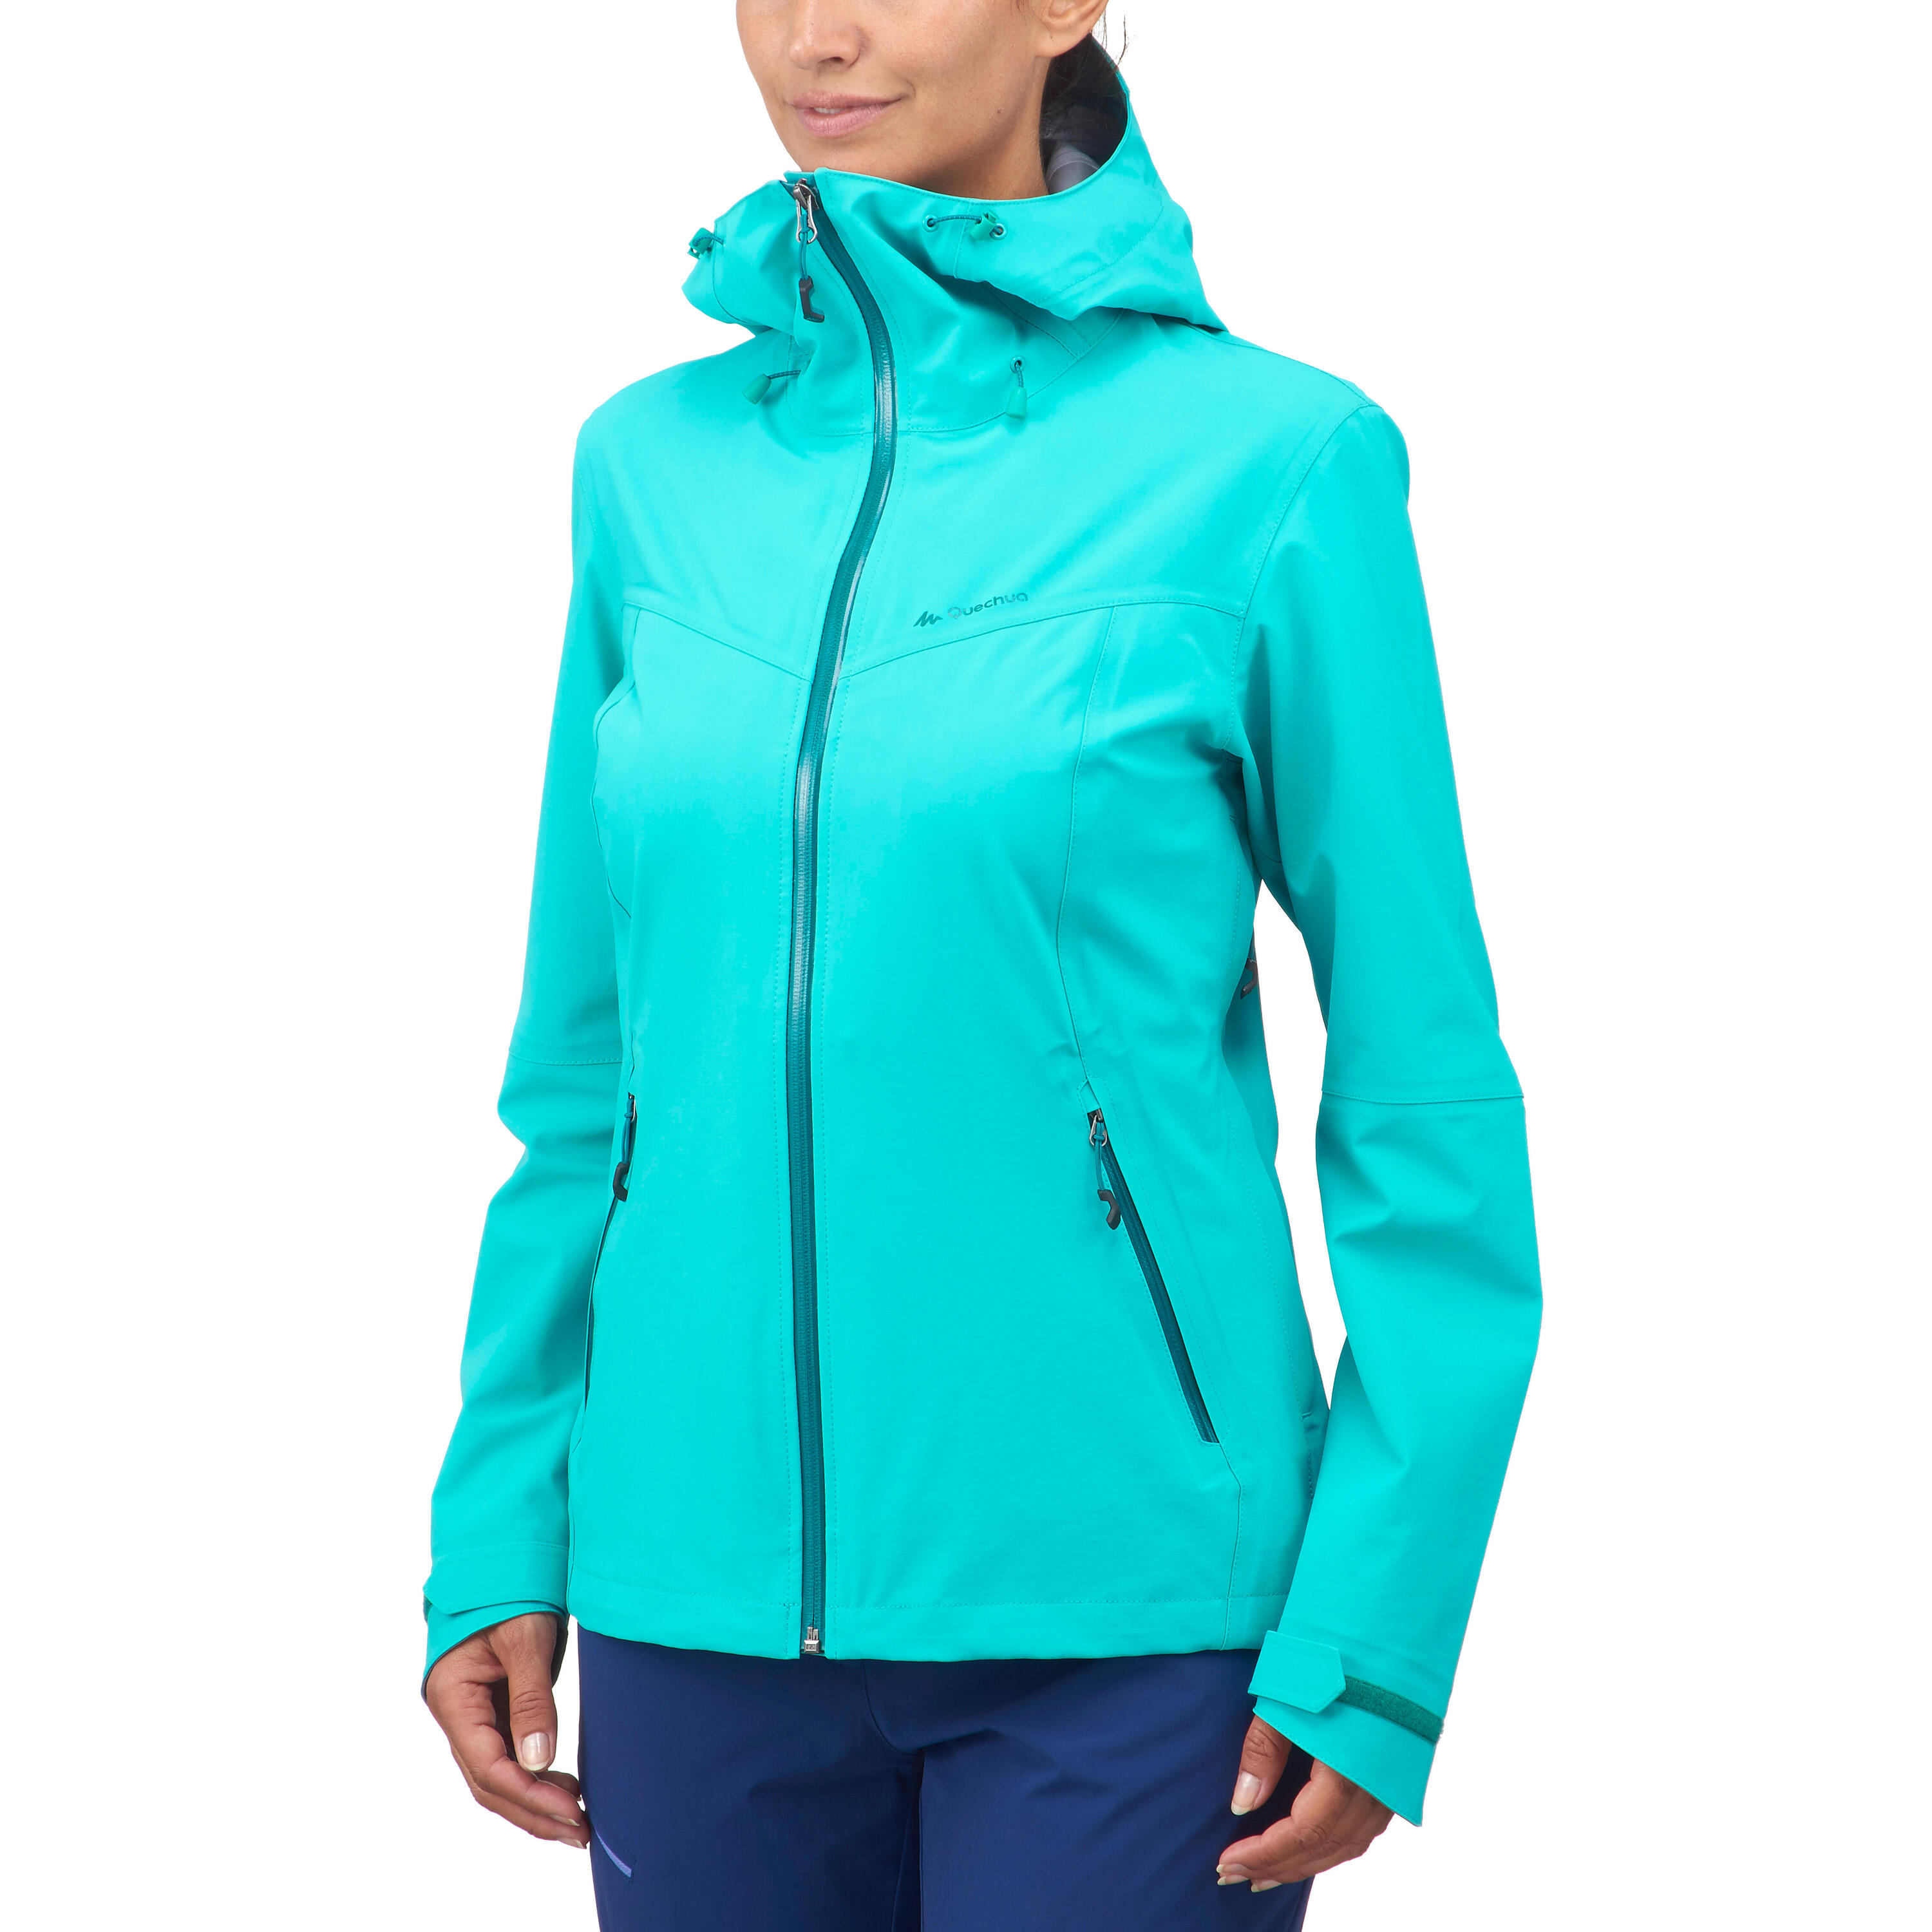 MH500 Women's Mountain Hiking Waterproof Jacket - Turquoise 3/17